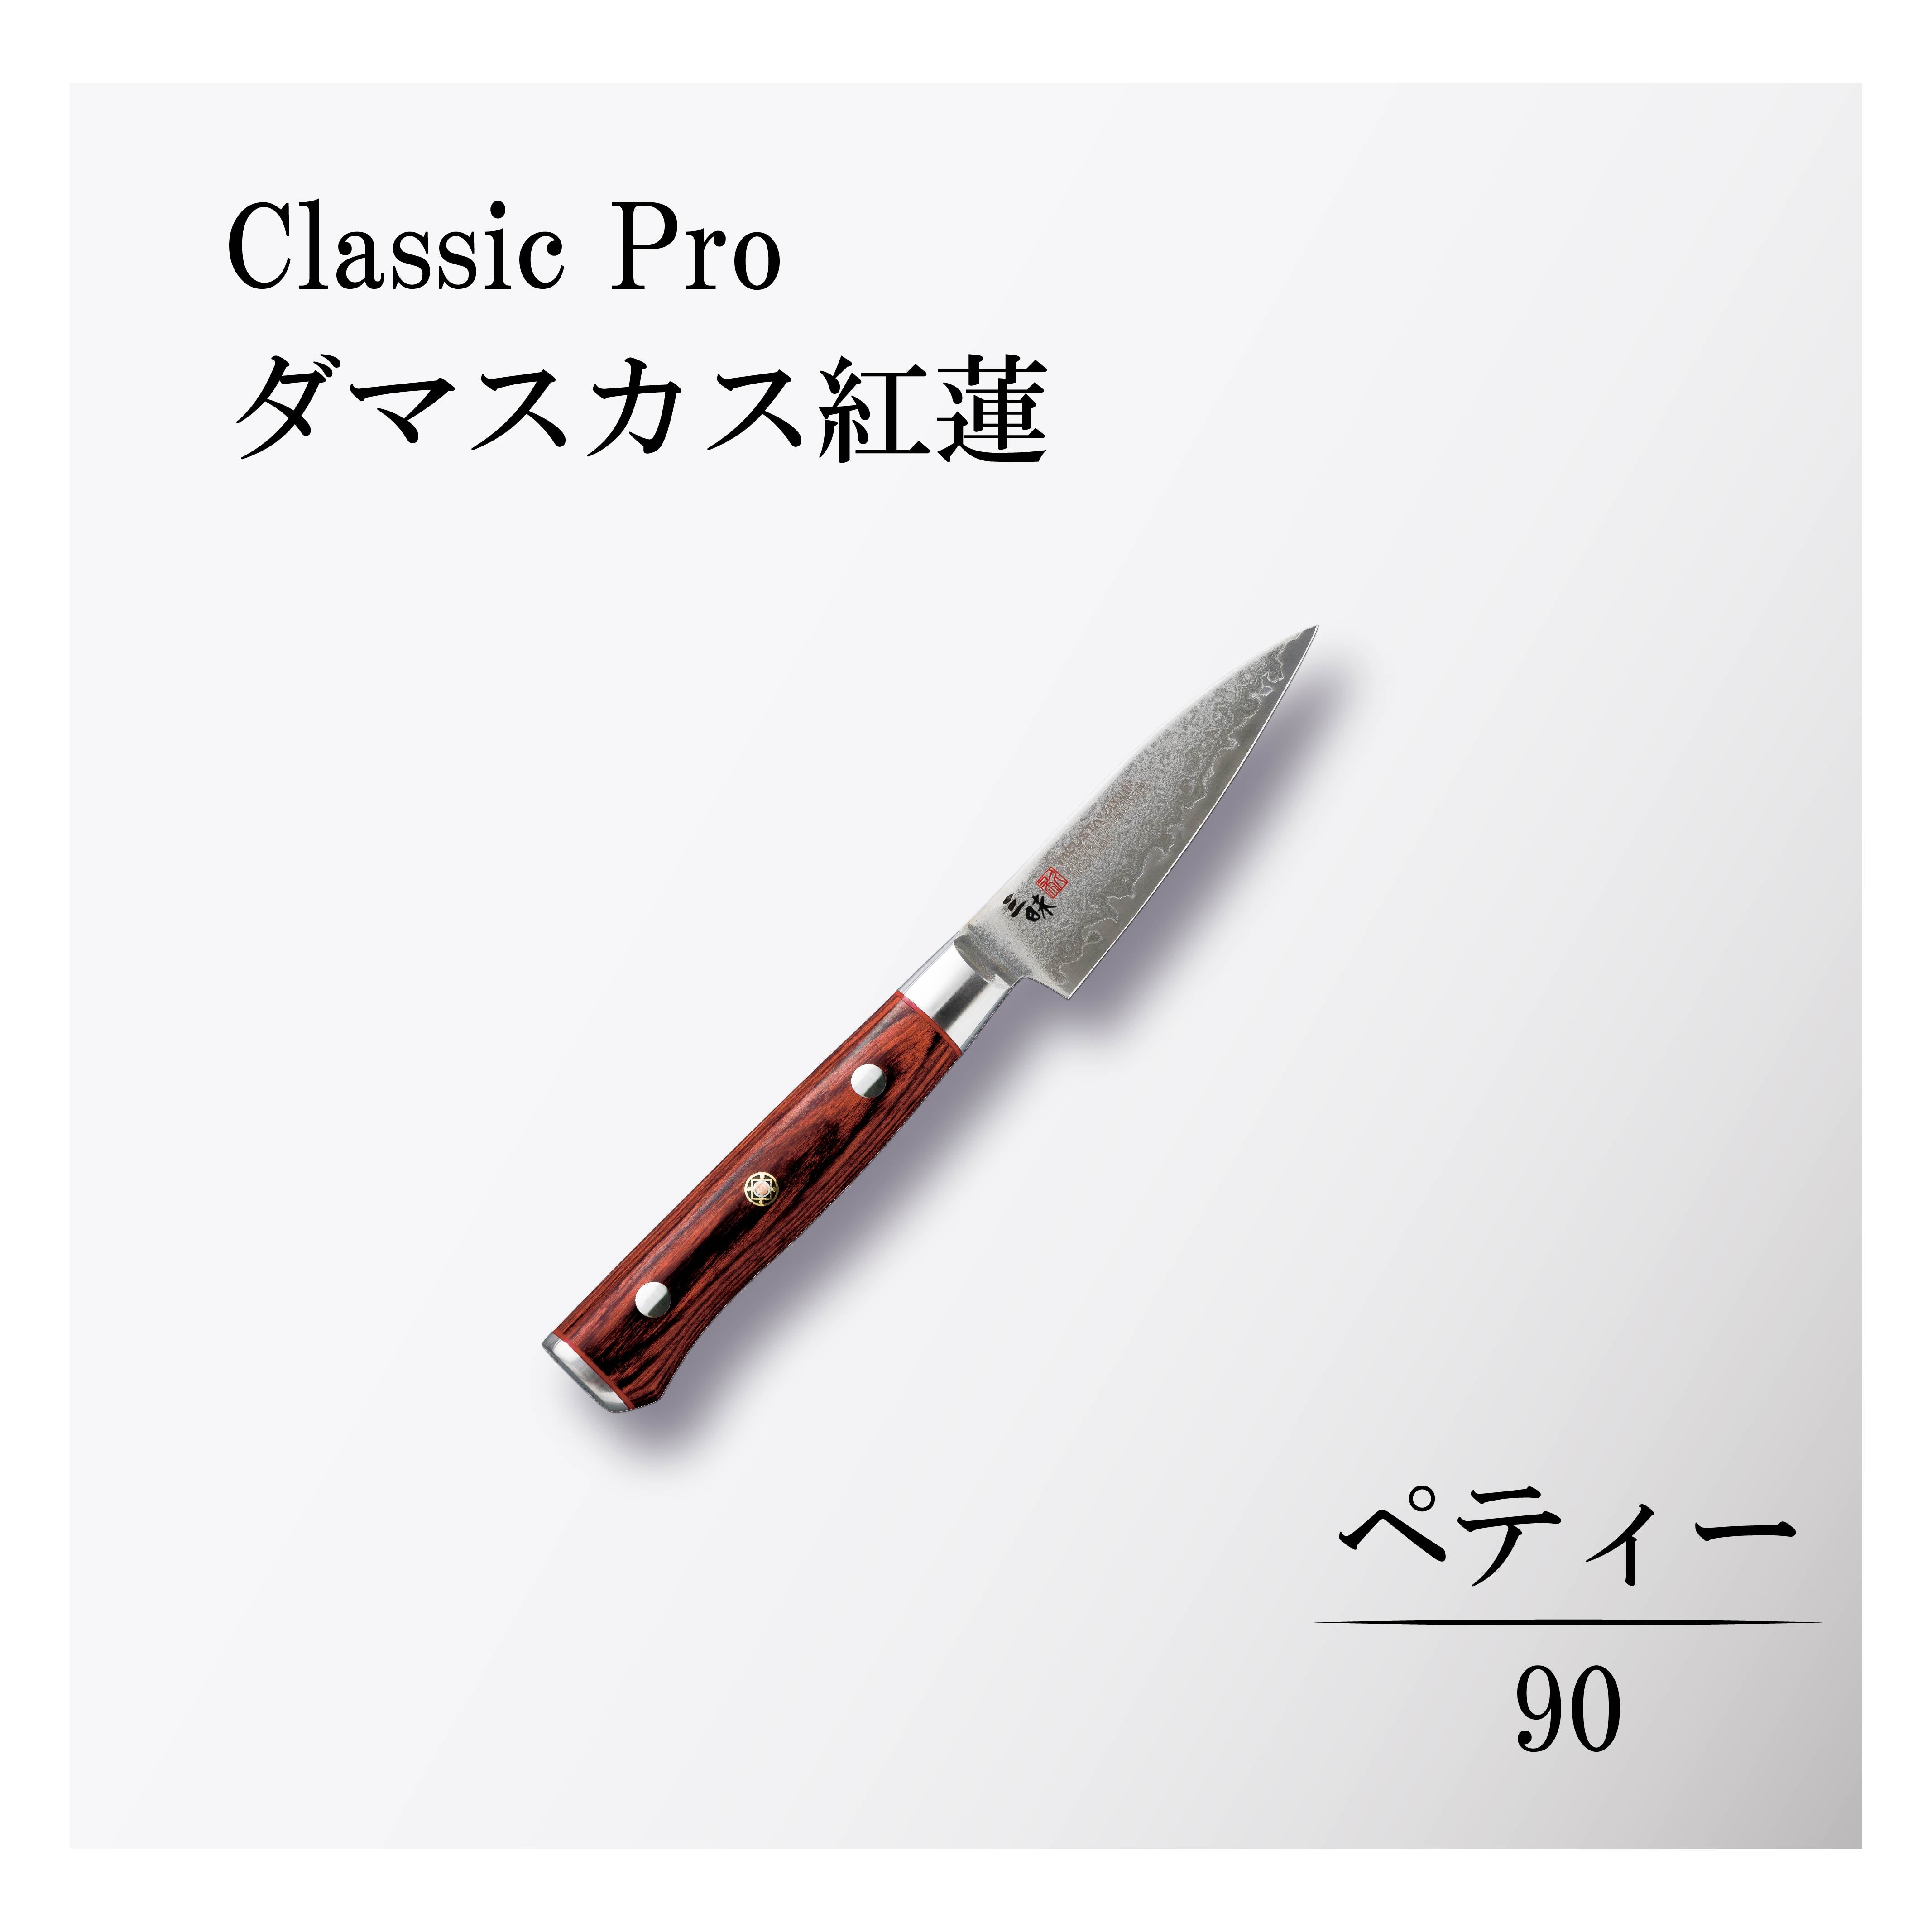 Classic Pro ダマスカス 紅蓮 – 丸章工業公式オンラインショップ